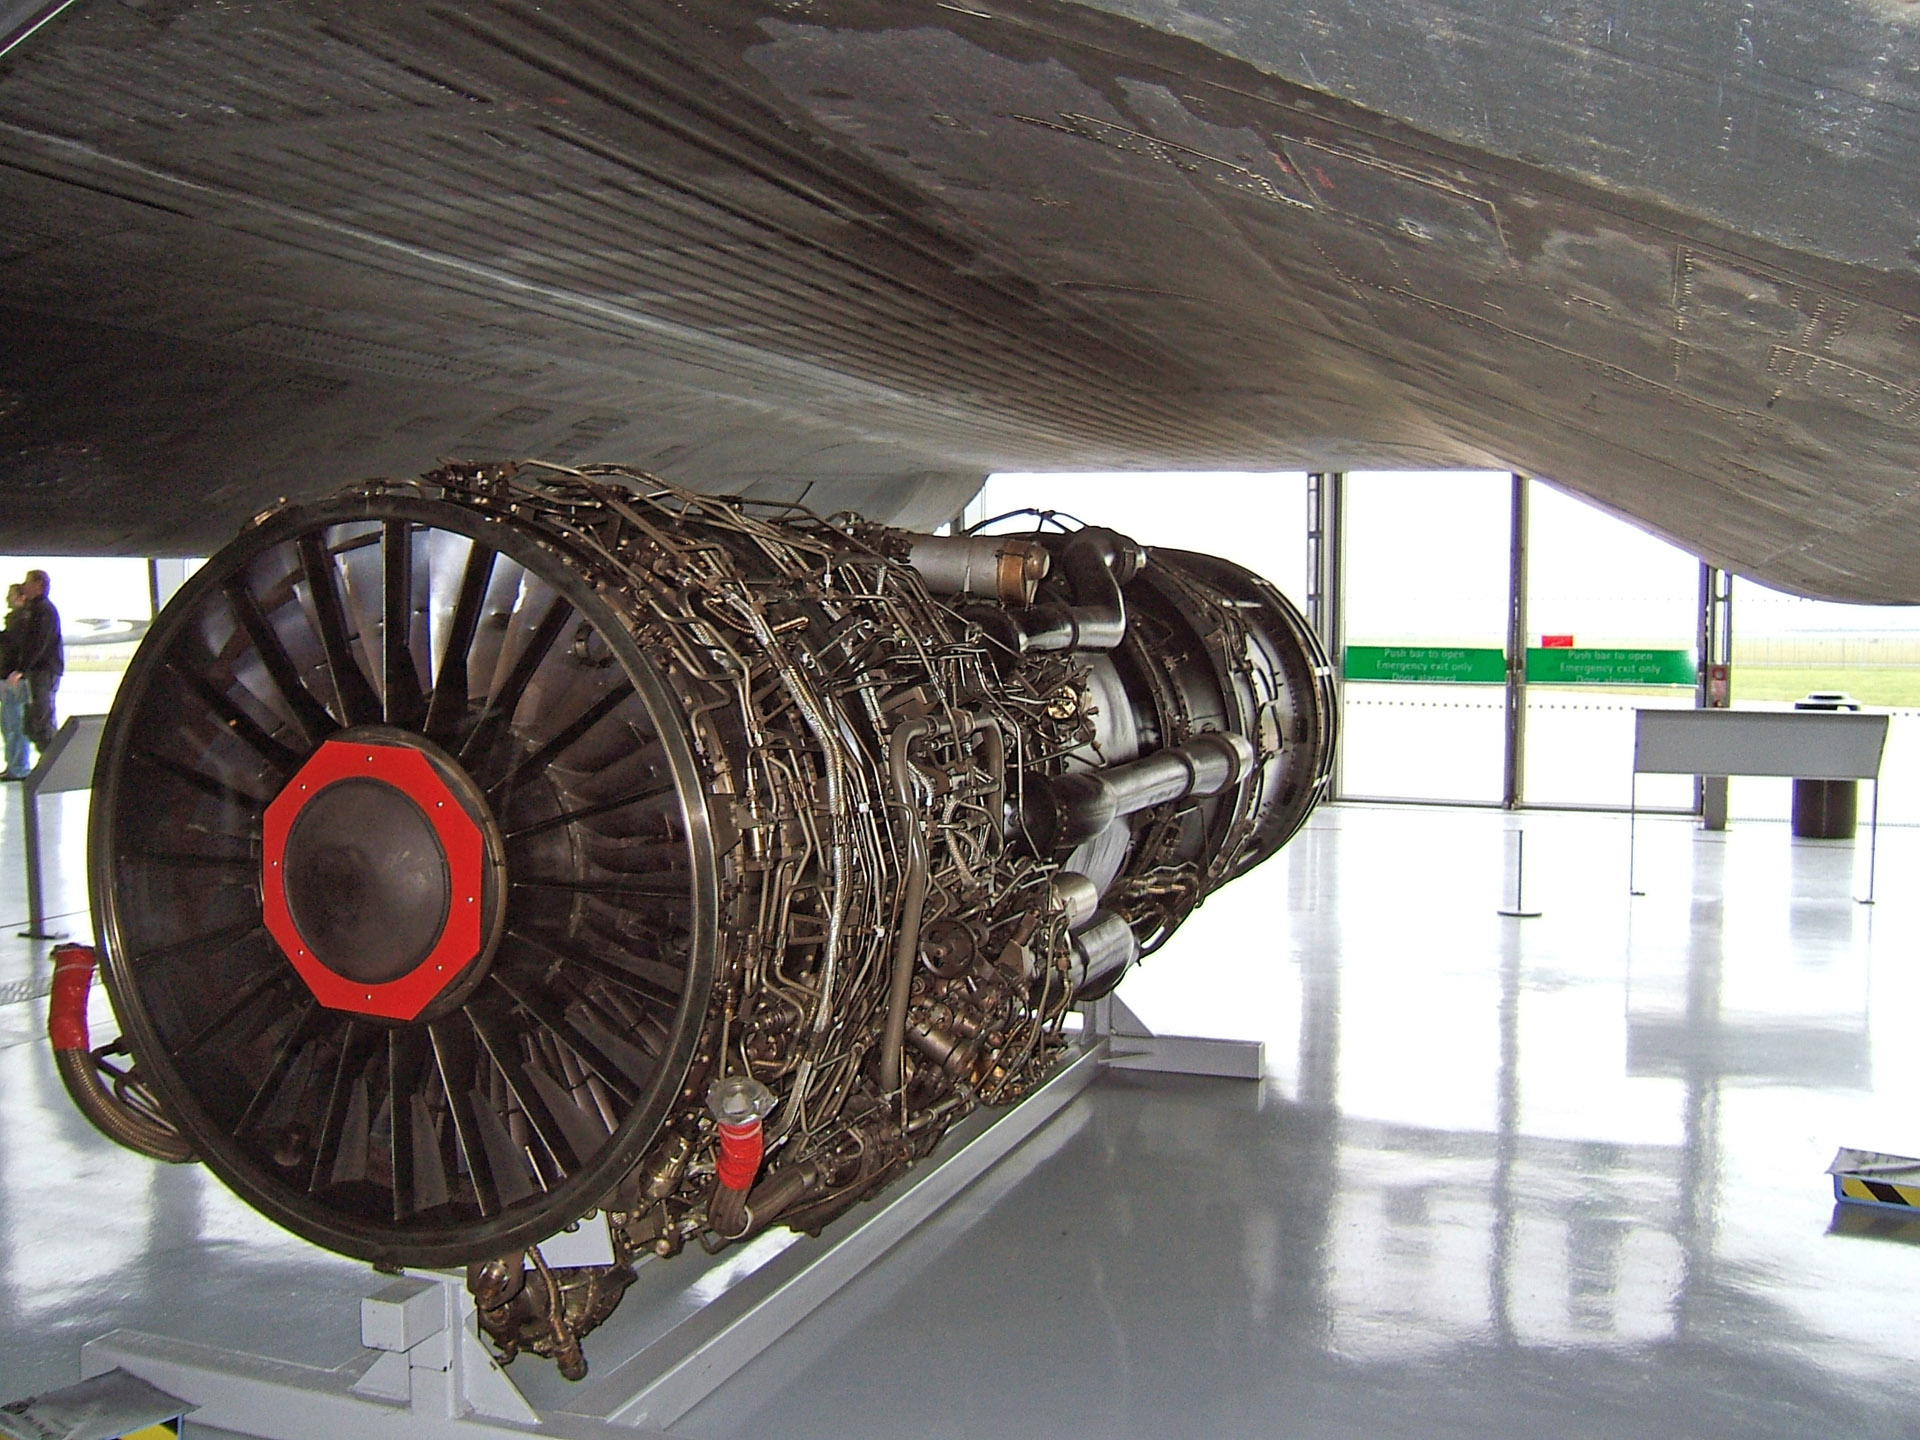 duxford Engine from SR71A Blackbird